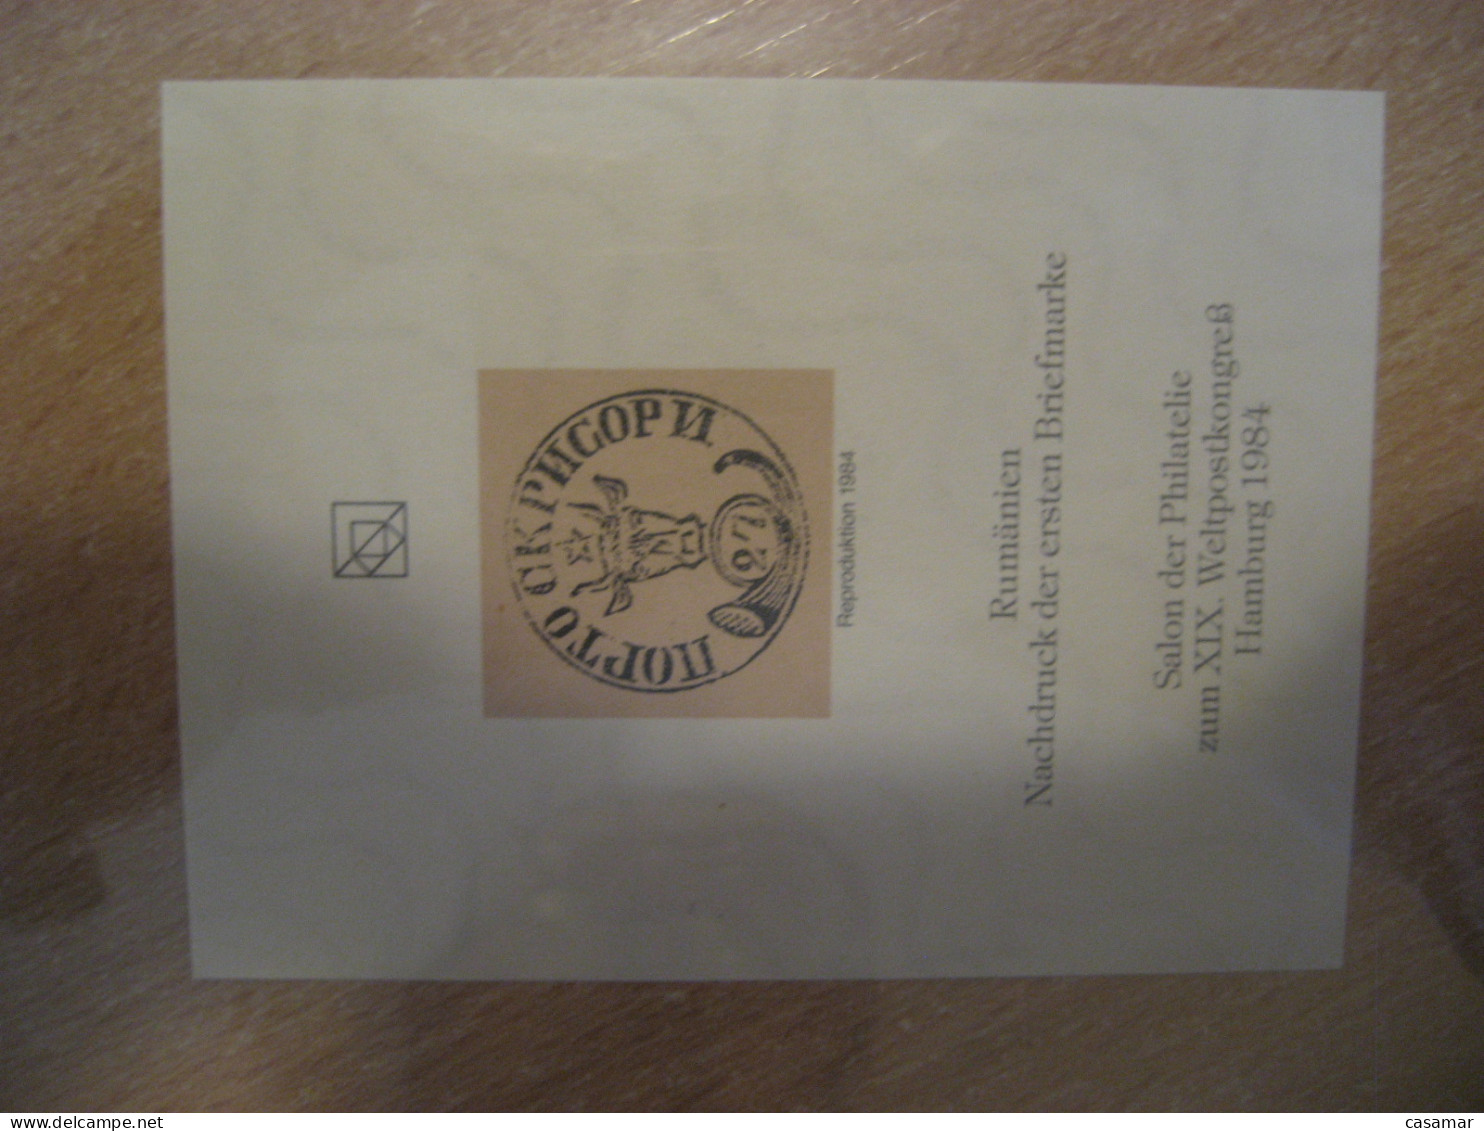 HAMBURG 1984 ROMANIA Imperforated Reproduktion Proof Epreuve Nachdruck Poster Stamp Vignette GERMANY Label - Probe- Und Nachdrucke